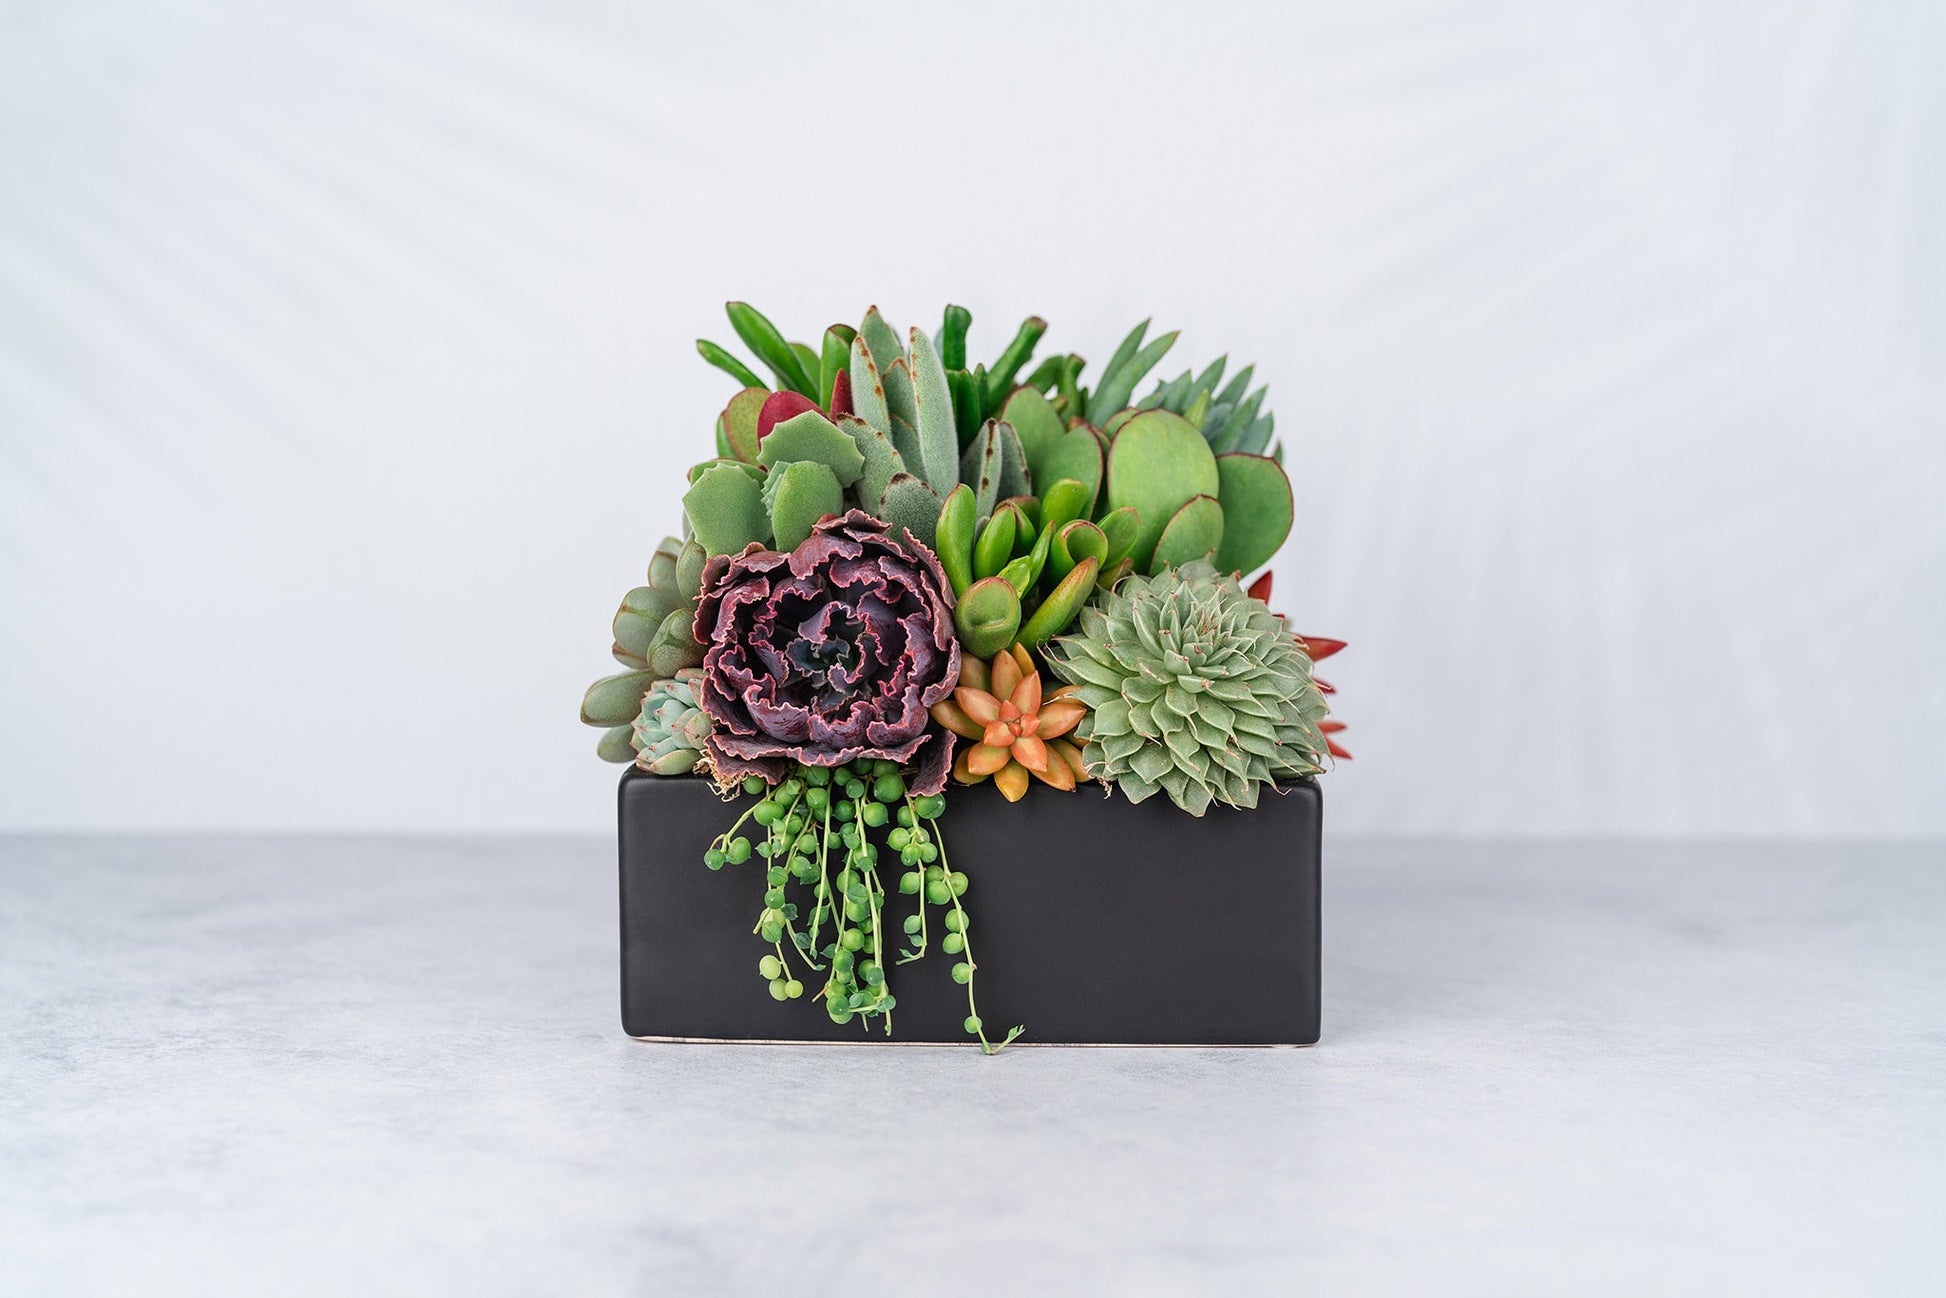 Black Boat Succulent Arrangement Planter: Modern Living Succulent Gift, Centerpiece for Weddings & Events, Housewarming Gift